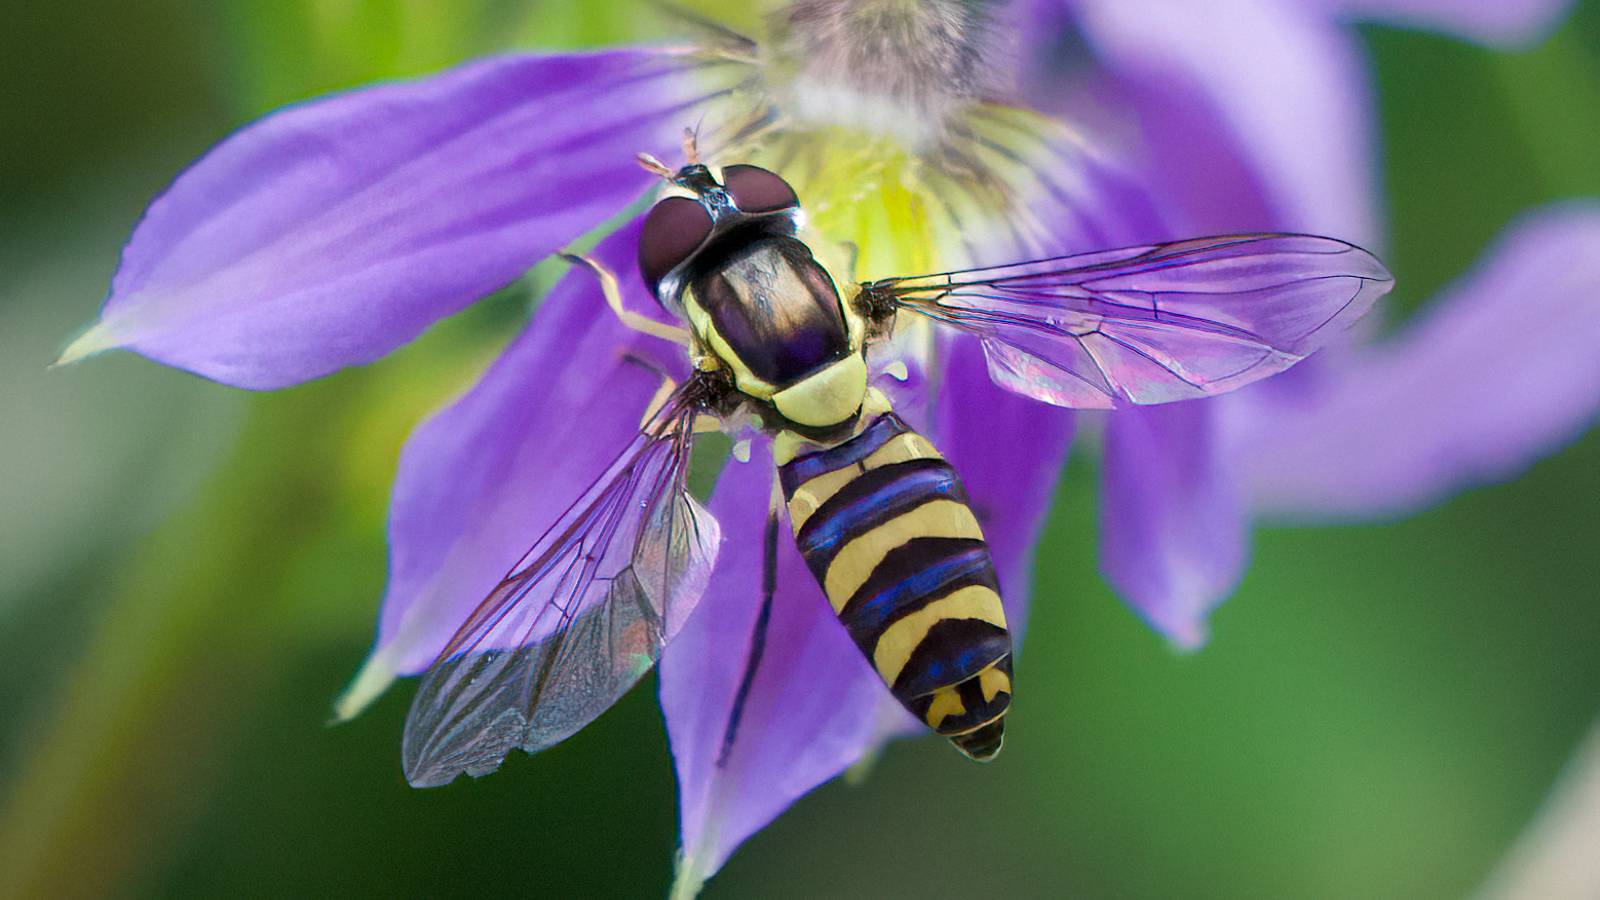 Fauna: Hoverfly on purple flower